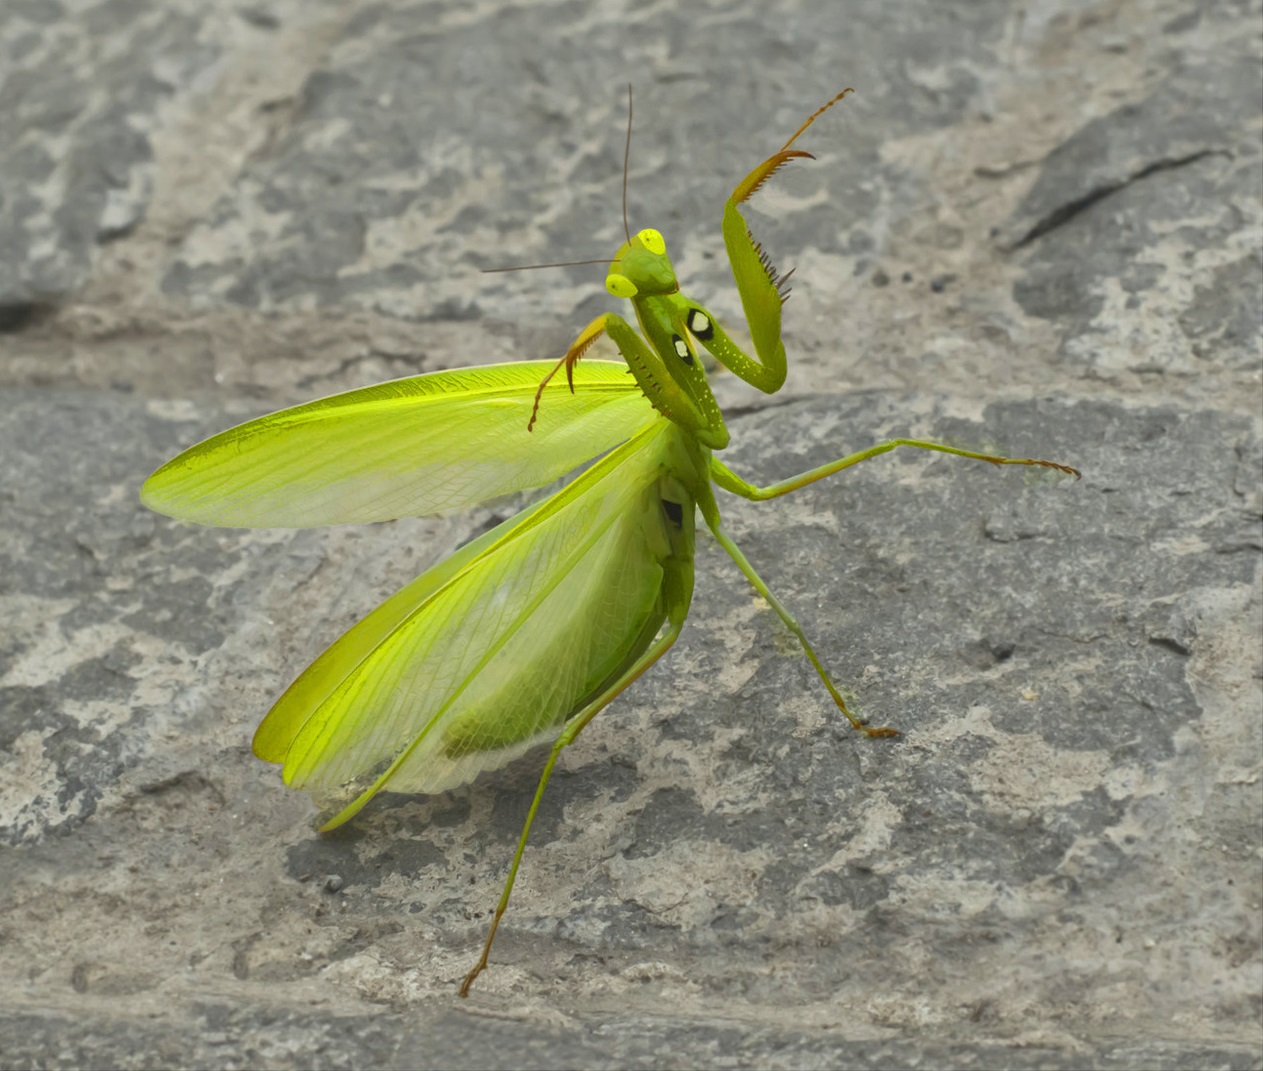 Mantis ordinari o mantis religiós (lat. Mantis religiosa)